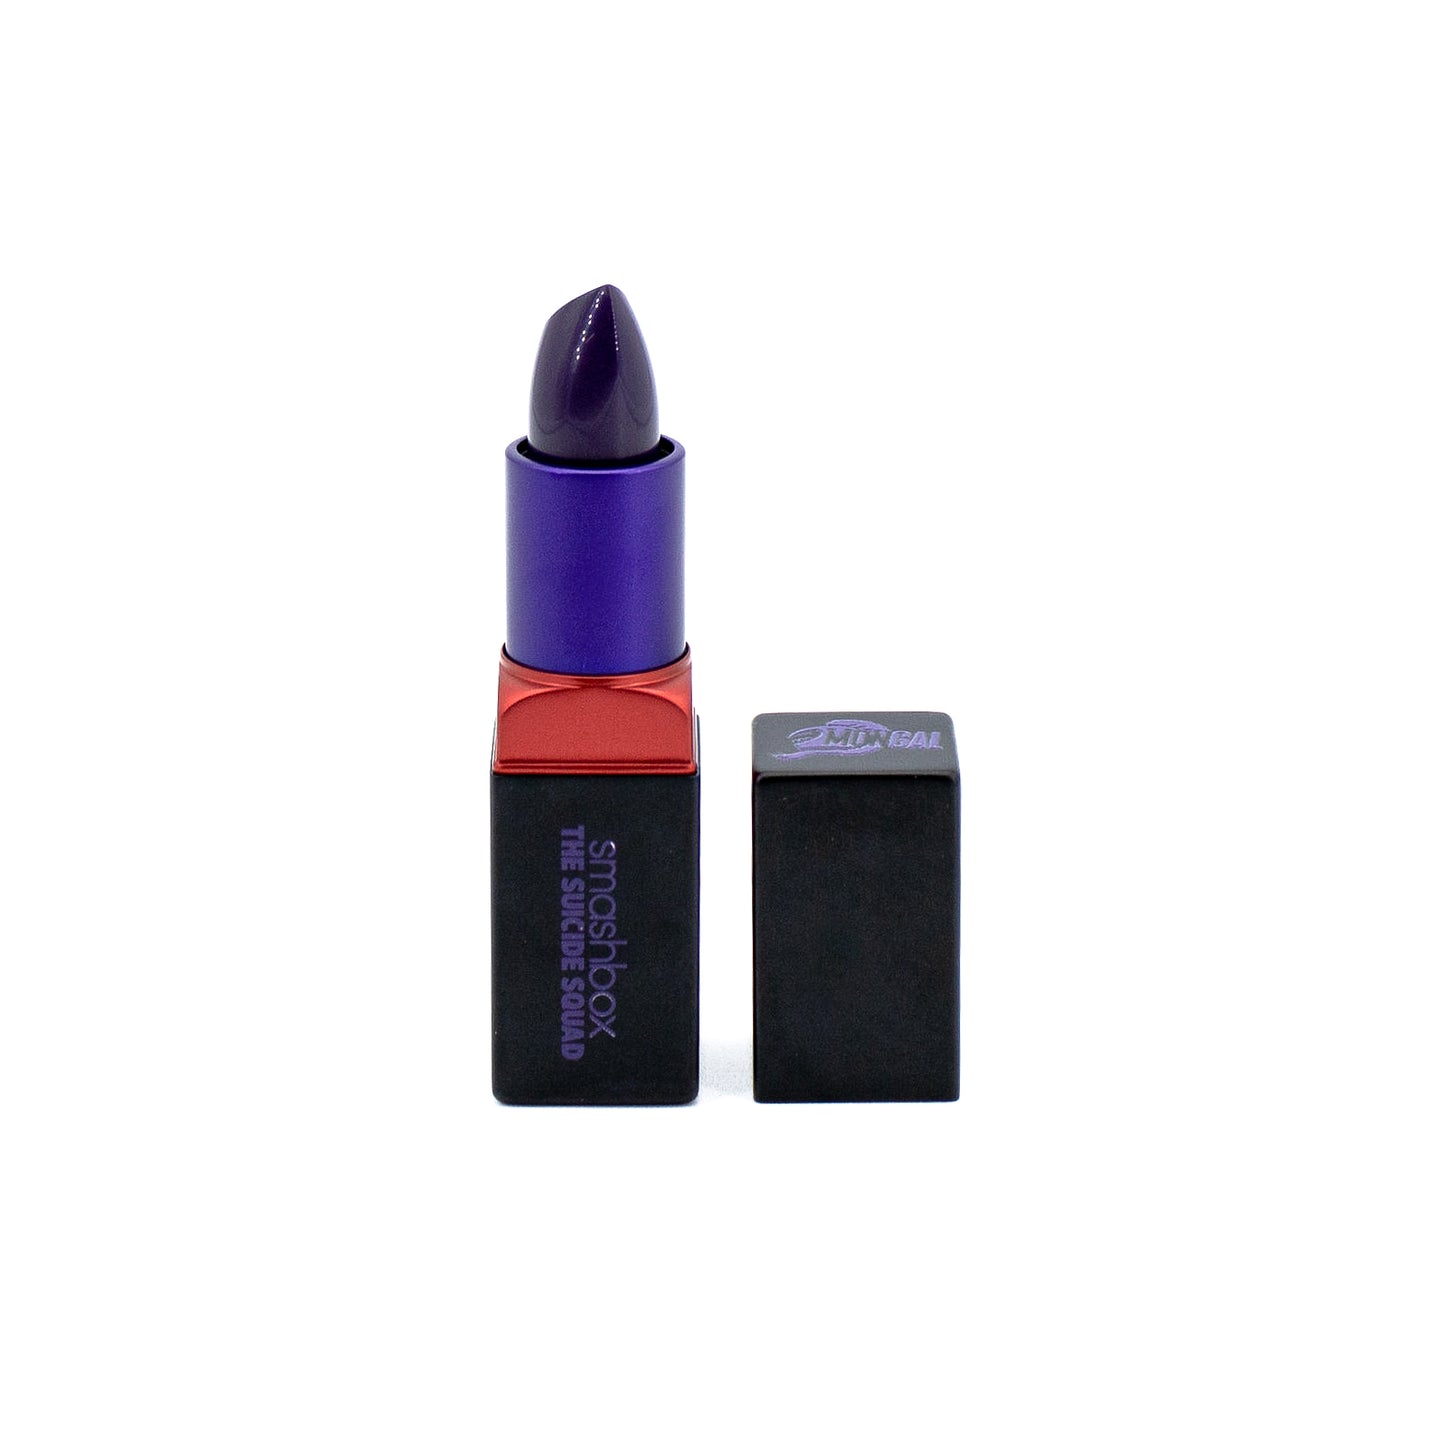 smashbox Be Legendary Prime & Plush Lipstick MONGAL .14oz - Missing Box